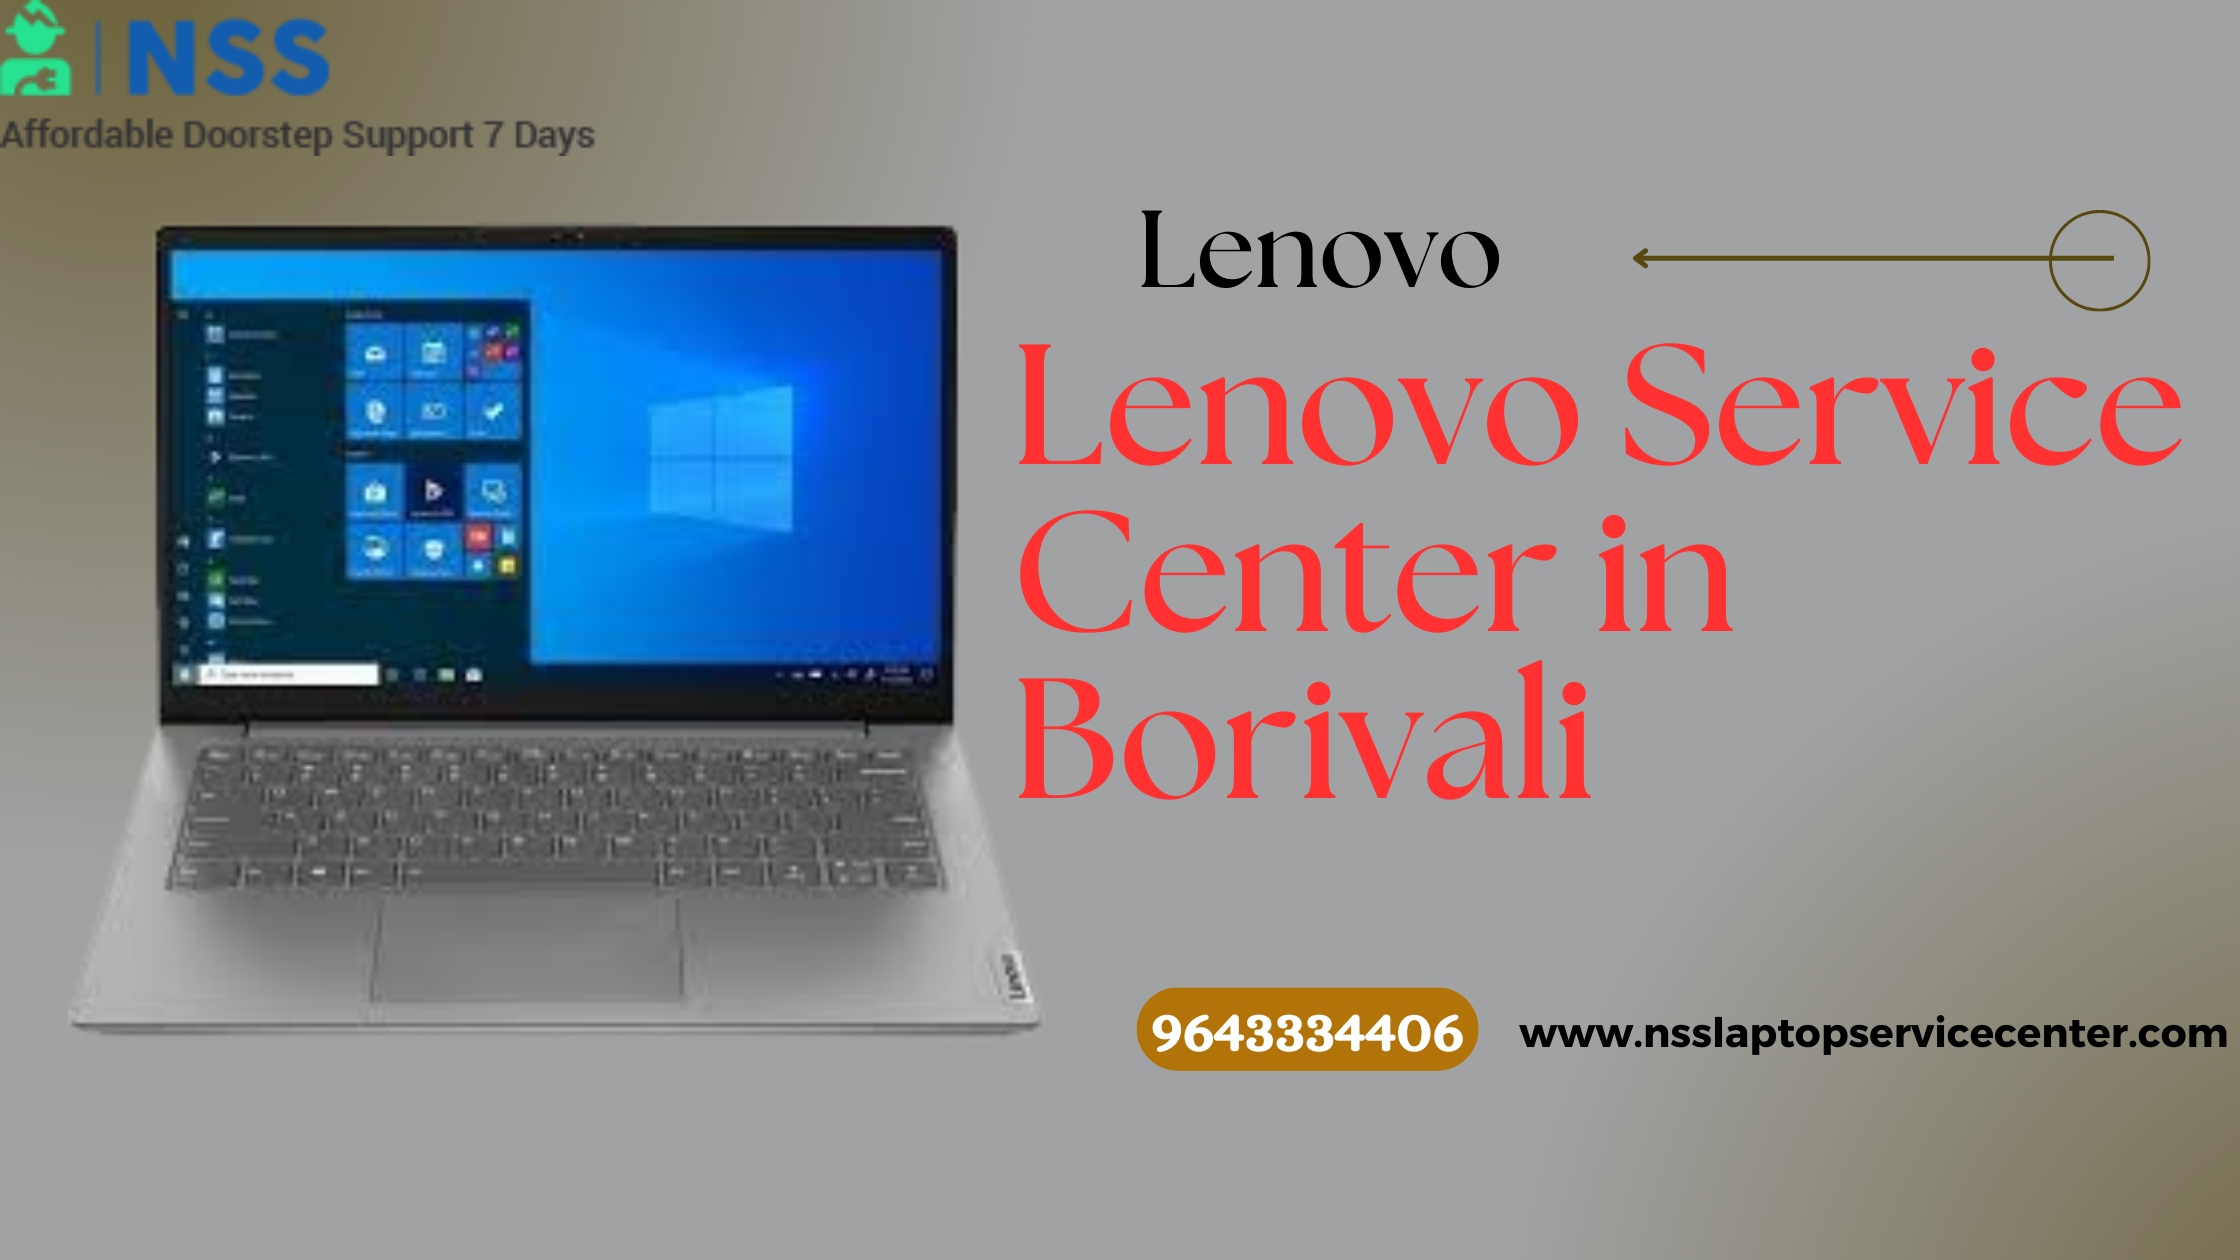 Lenovo Service Center in Borivali Near Mumbai